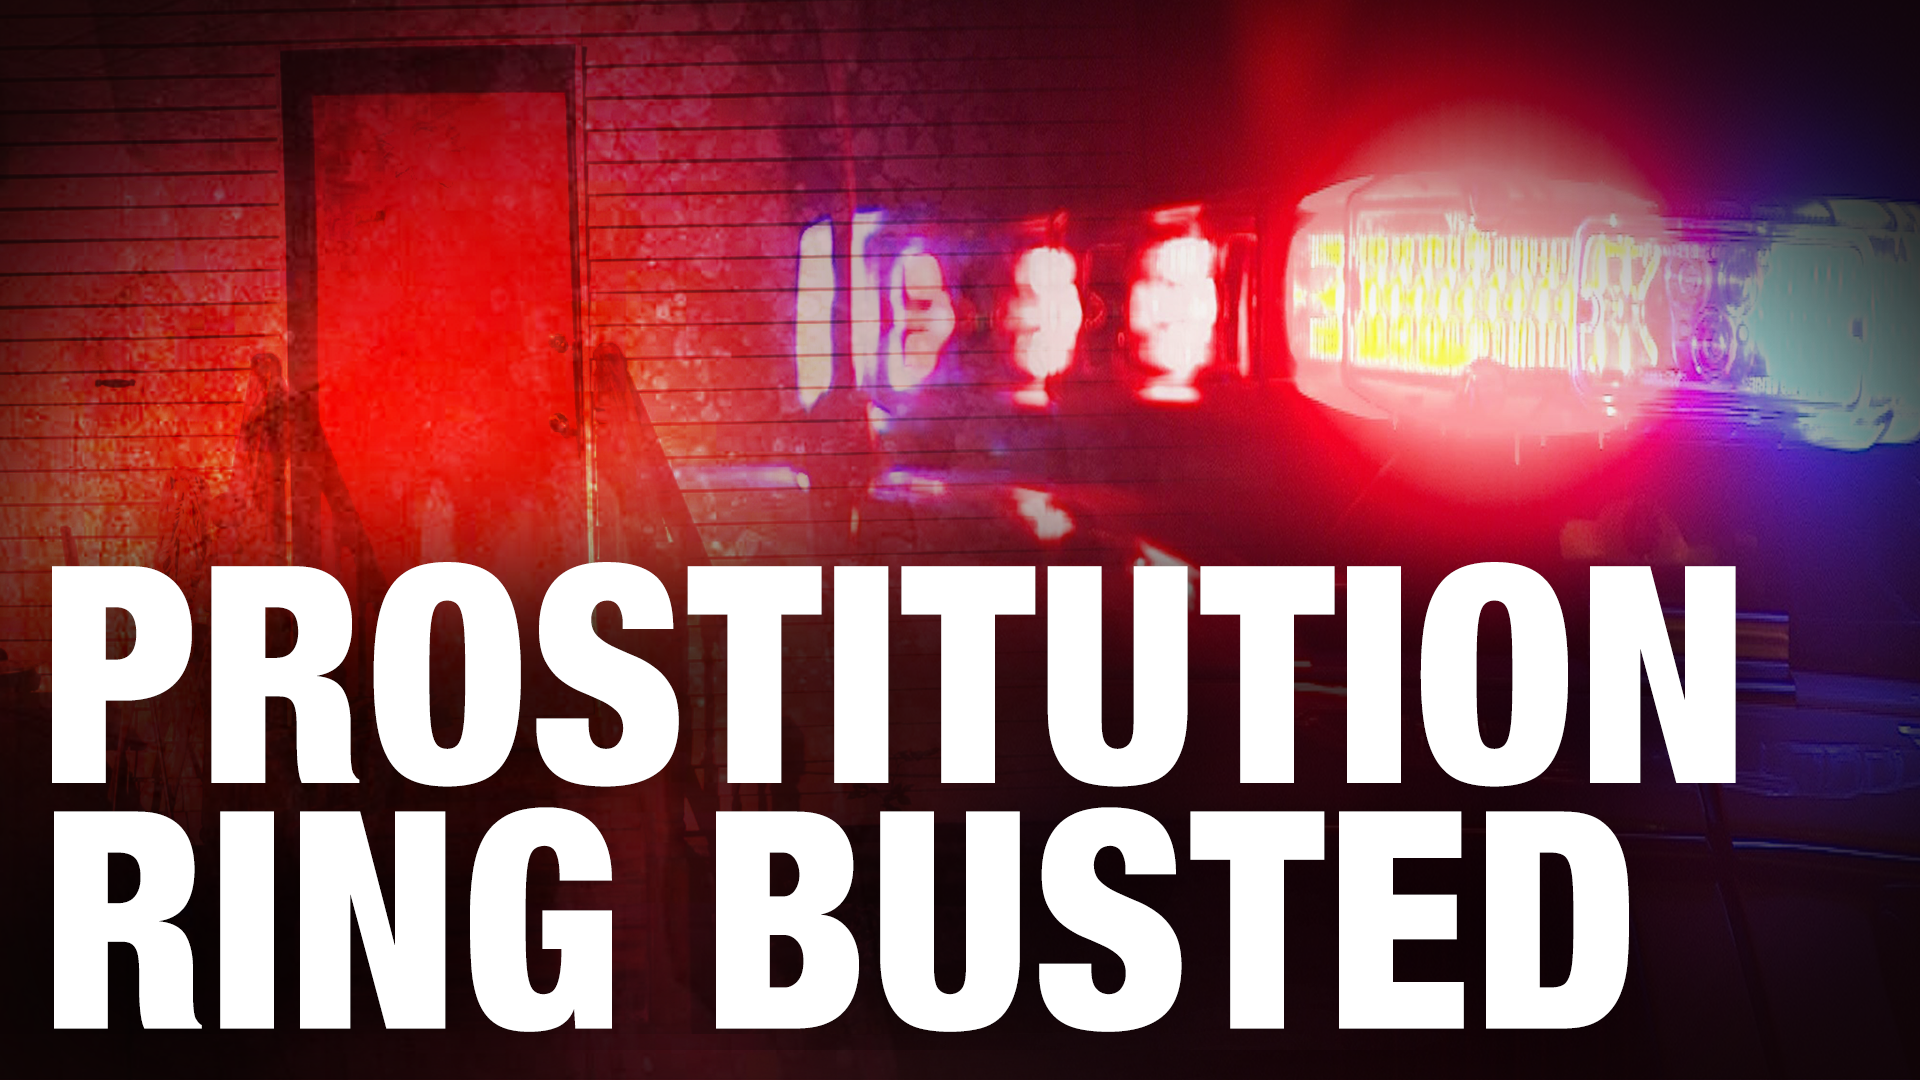 Investigators Say Theyve Taken Down Nj Human Trafficking Prostitution Ring 9460